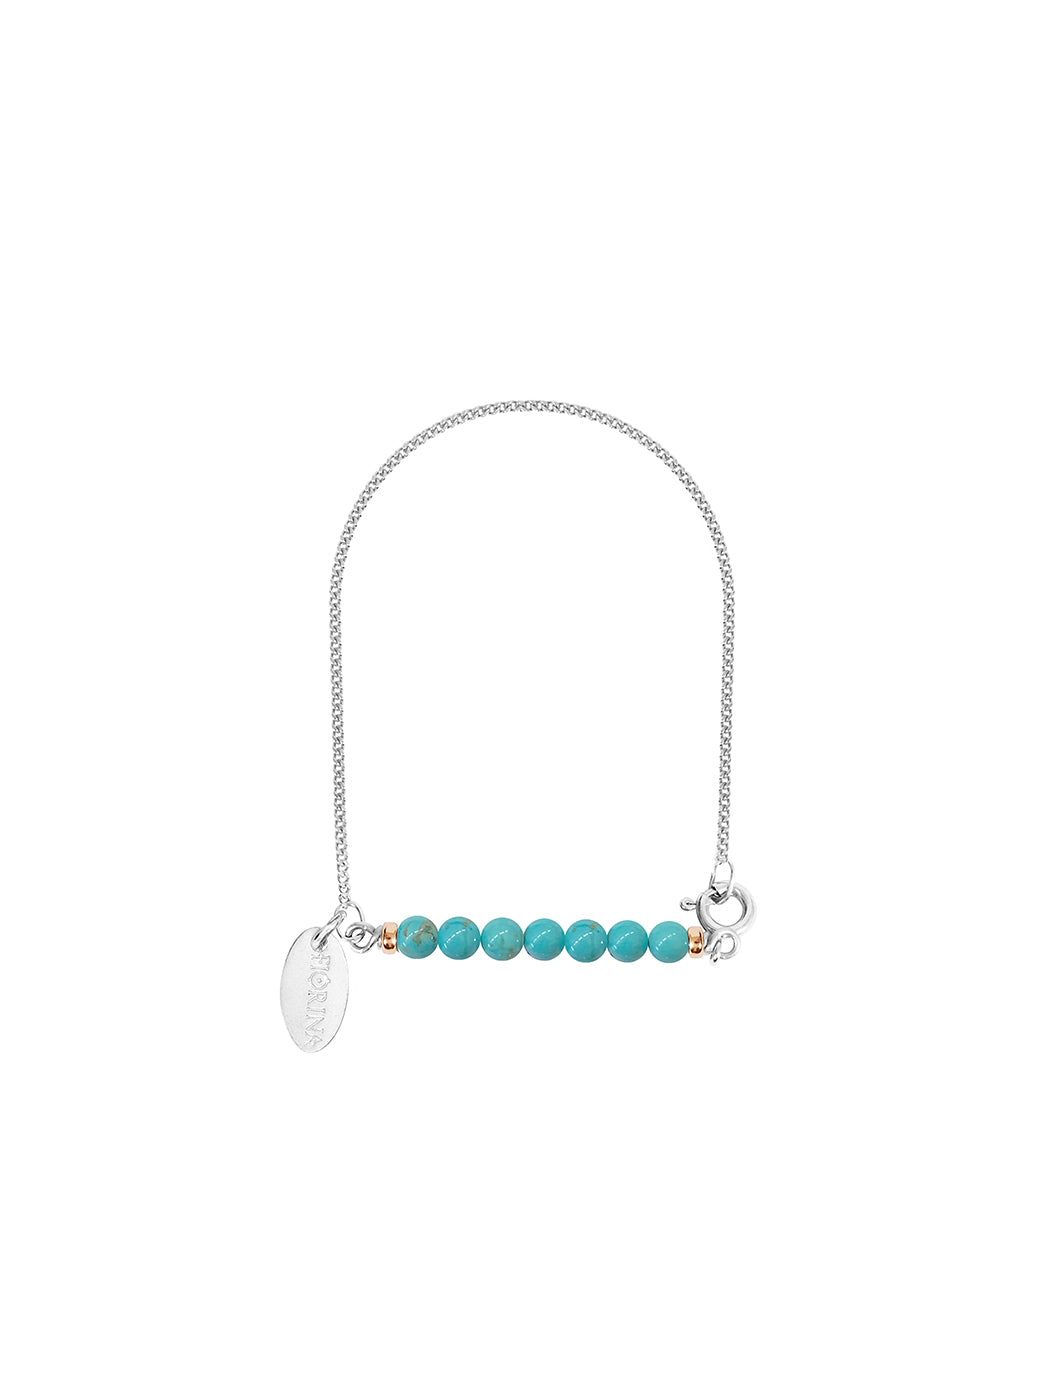 Fiorina Jewellery Silver Friendship Bracelet Turquoise